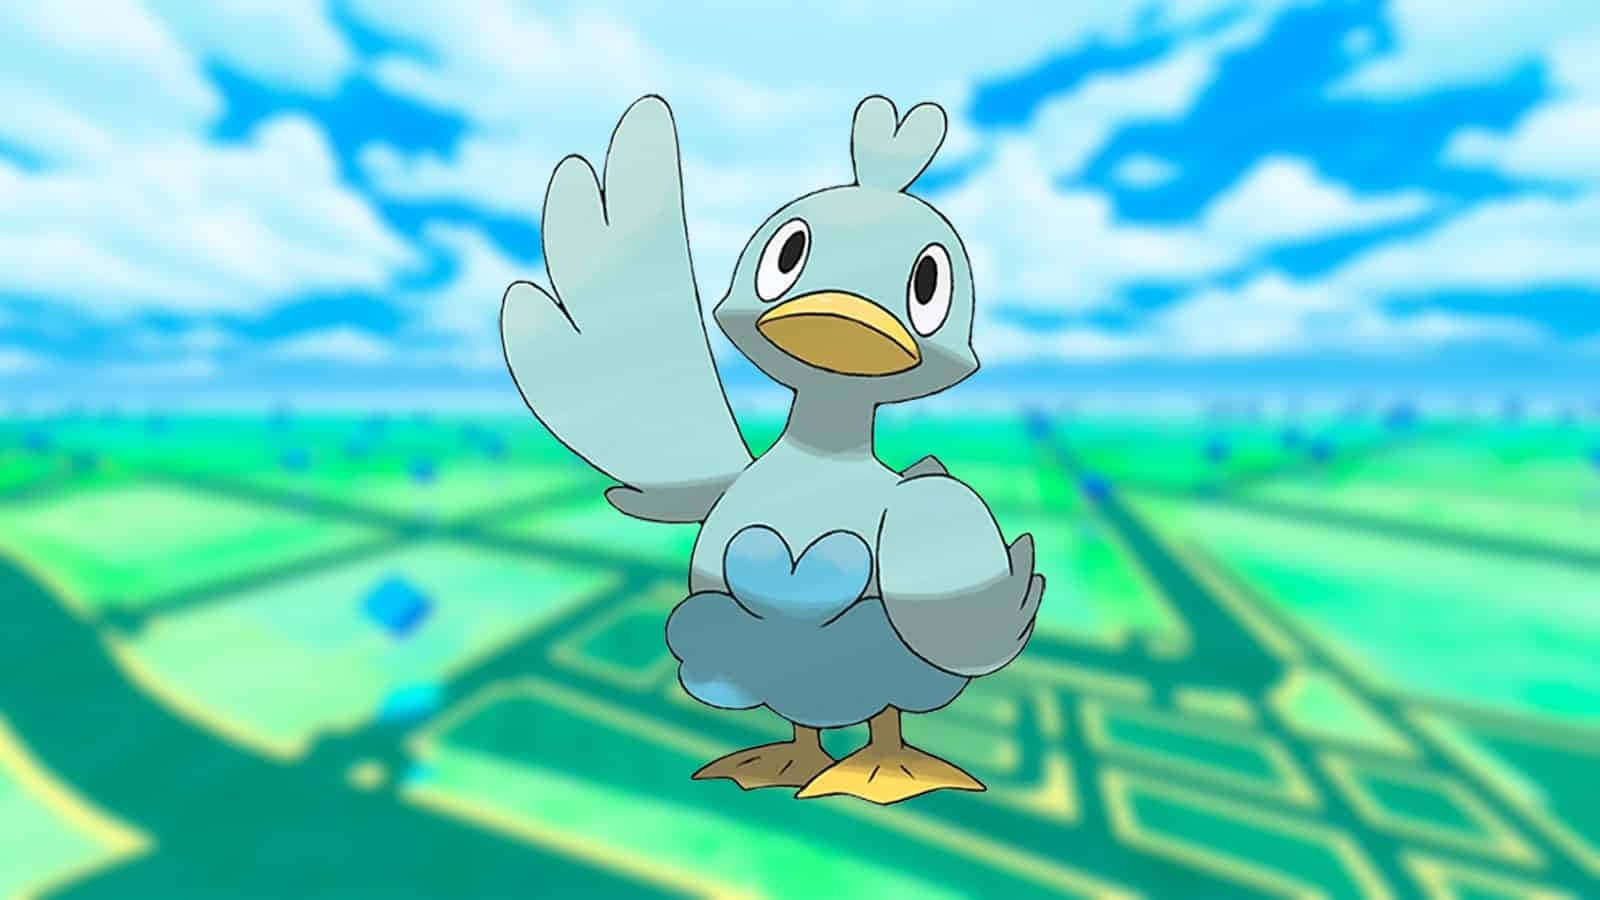 Papelde Parede De Ducklett No Mapa De Pokémon Go. Papel de Parede